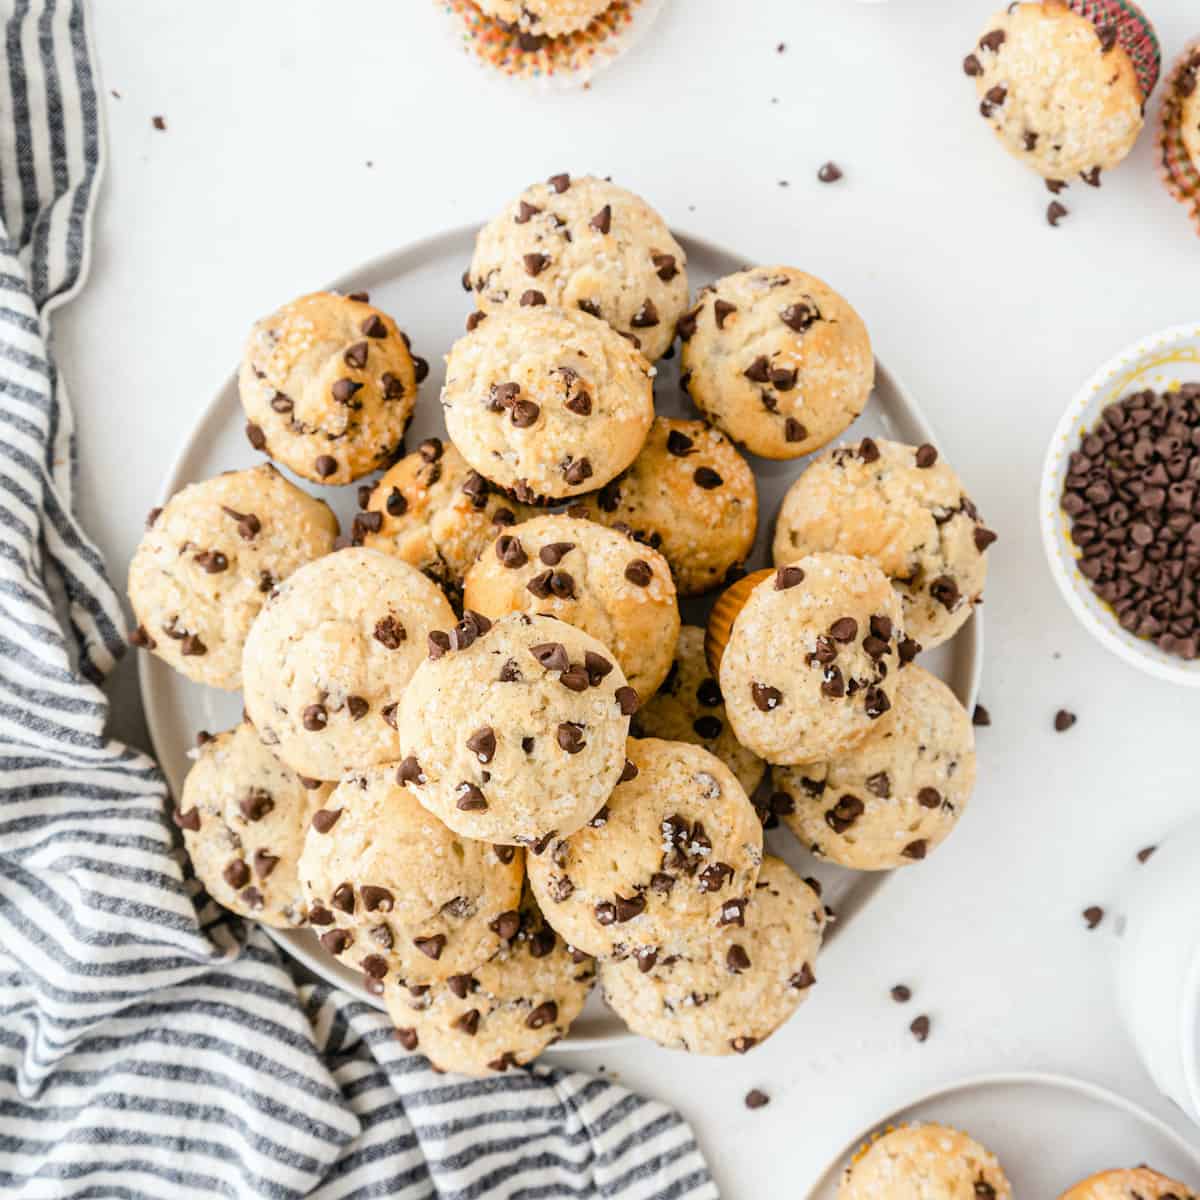 Chocolate Chip Mini Muffins